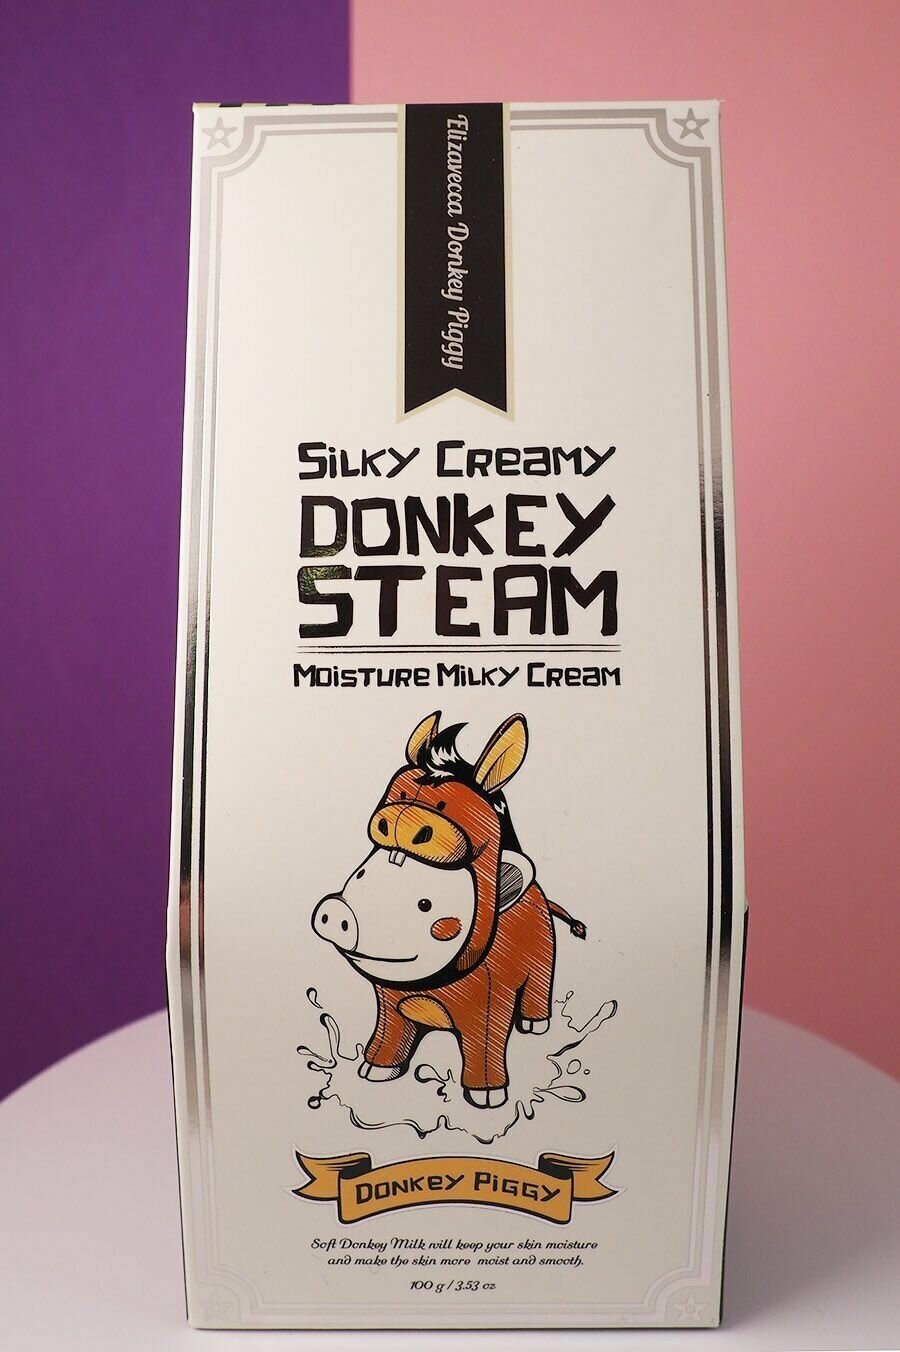 Silky creamy donkey steam cream moisture milky cream фото 43